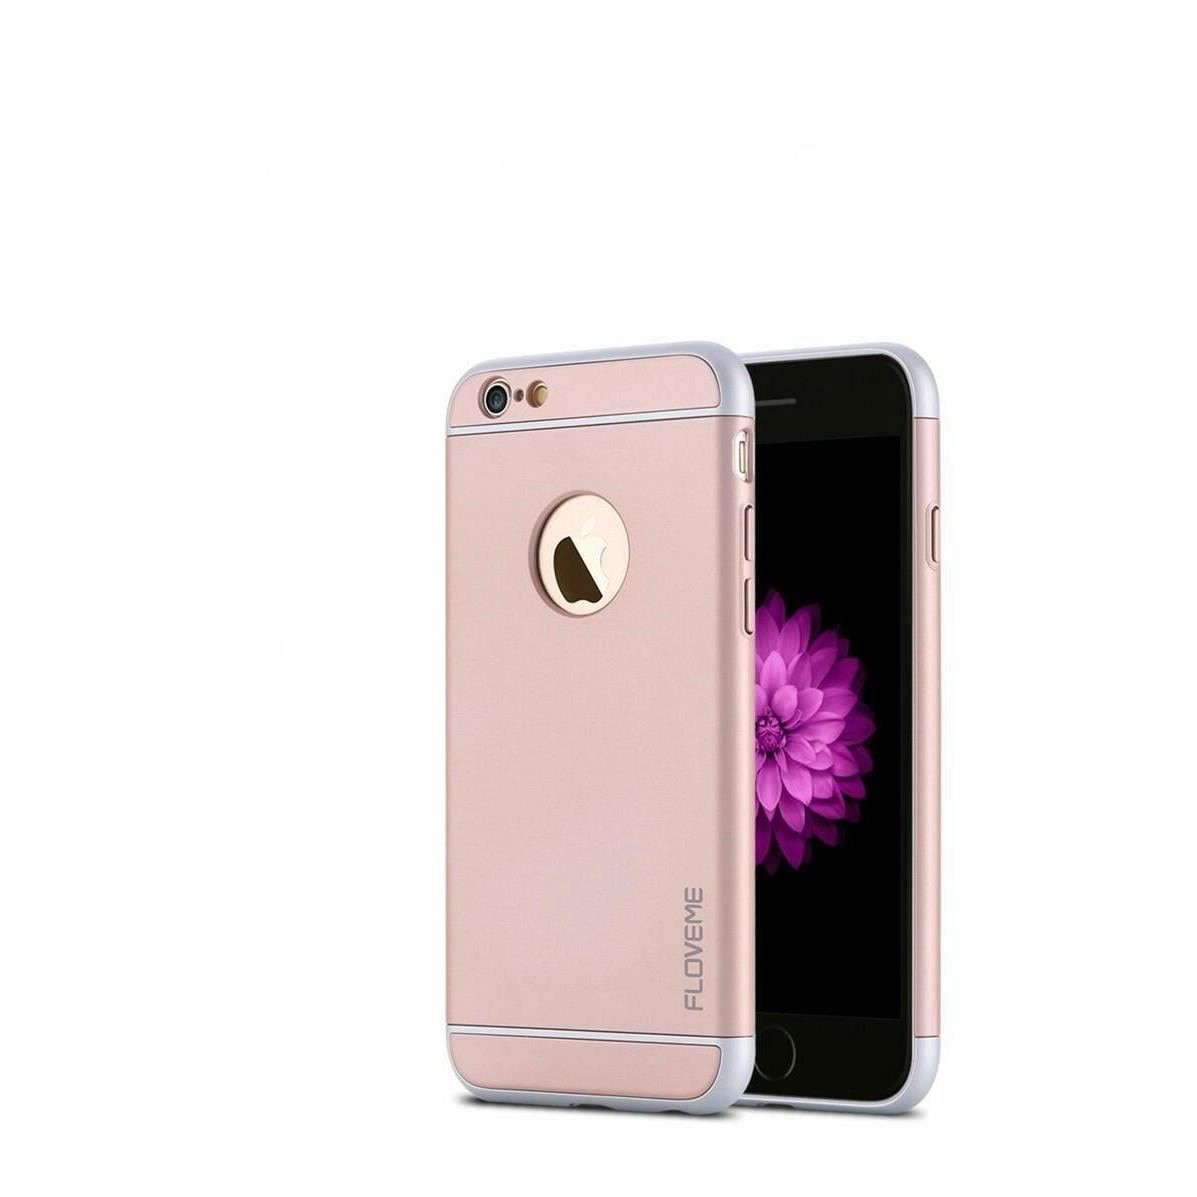 definite Bermad textbook Carcasa Floveme 360 Pentru iPhone 6,6s Gold Rose - eMAG.ro